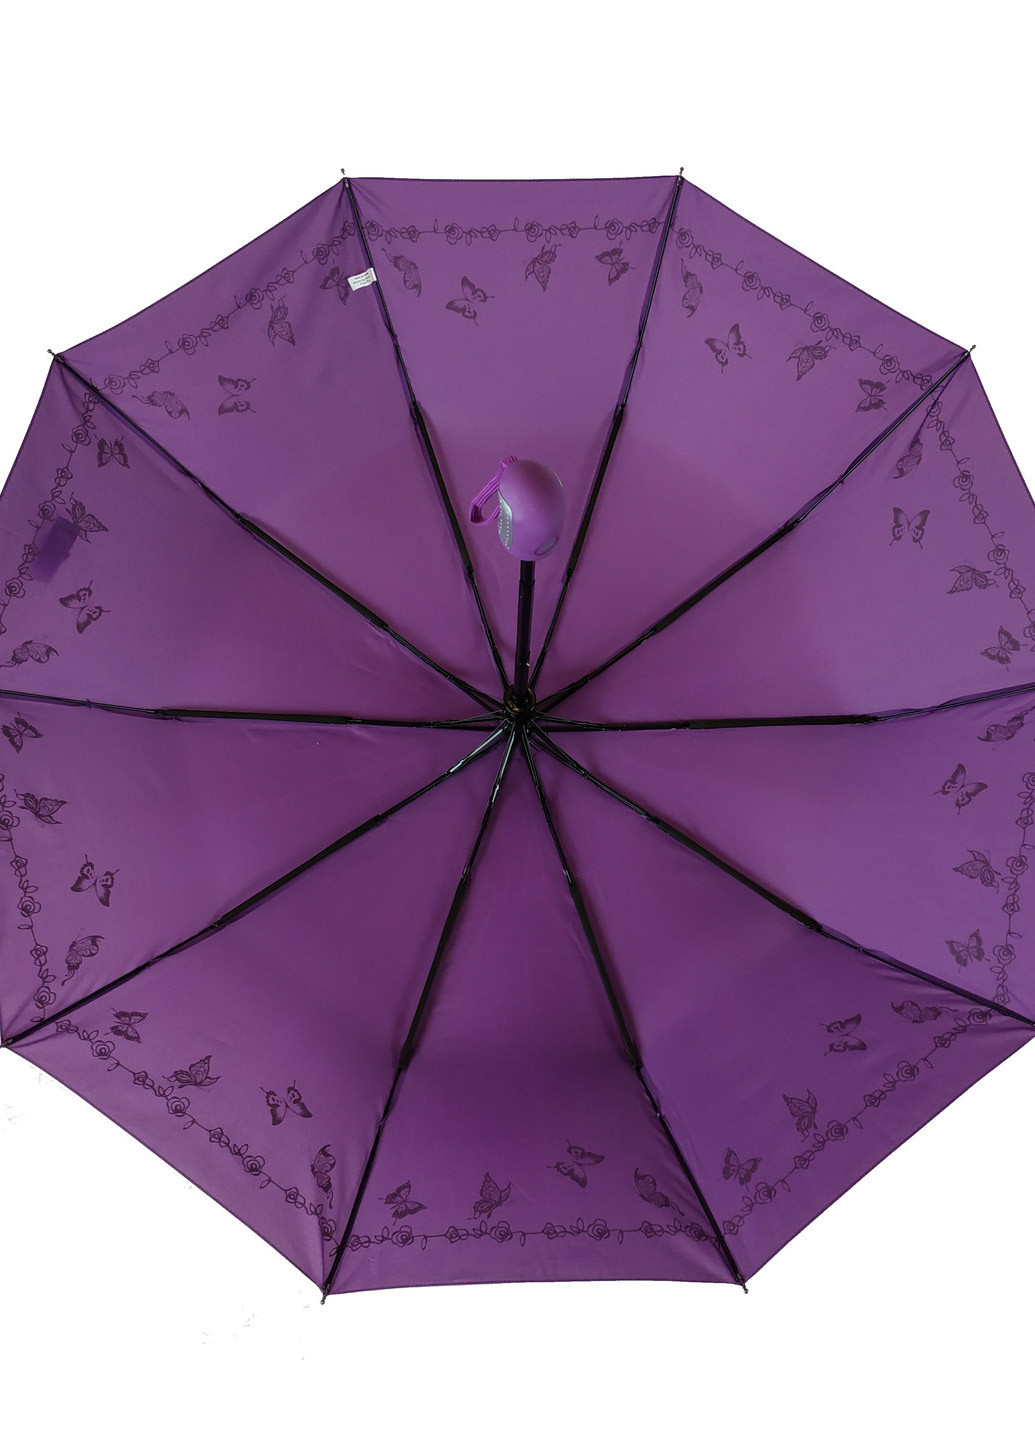 Женский зонт напівавтомат (18308) 99 см Bellissimo (189979005)